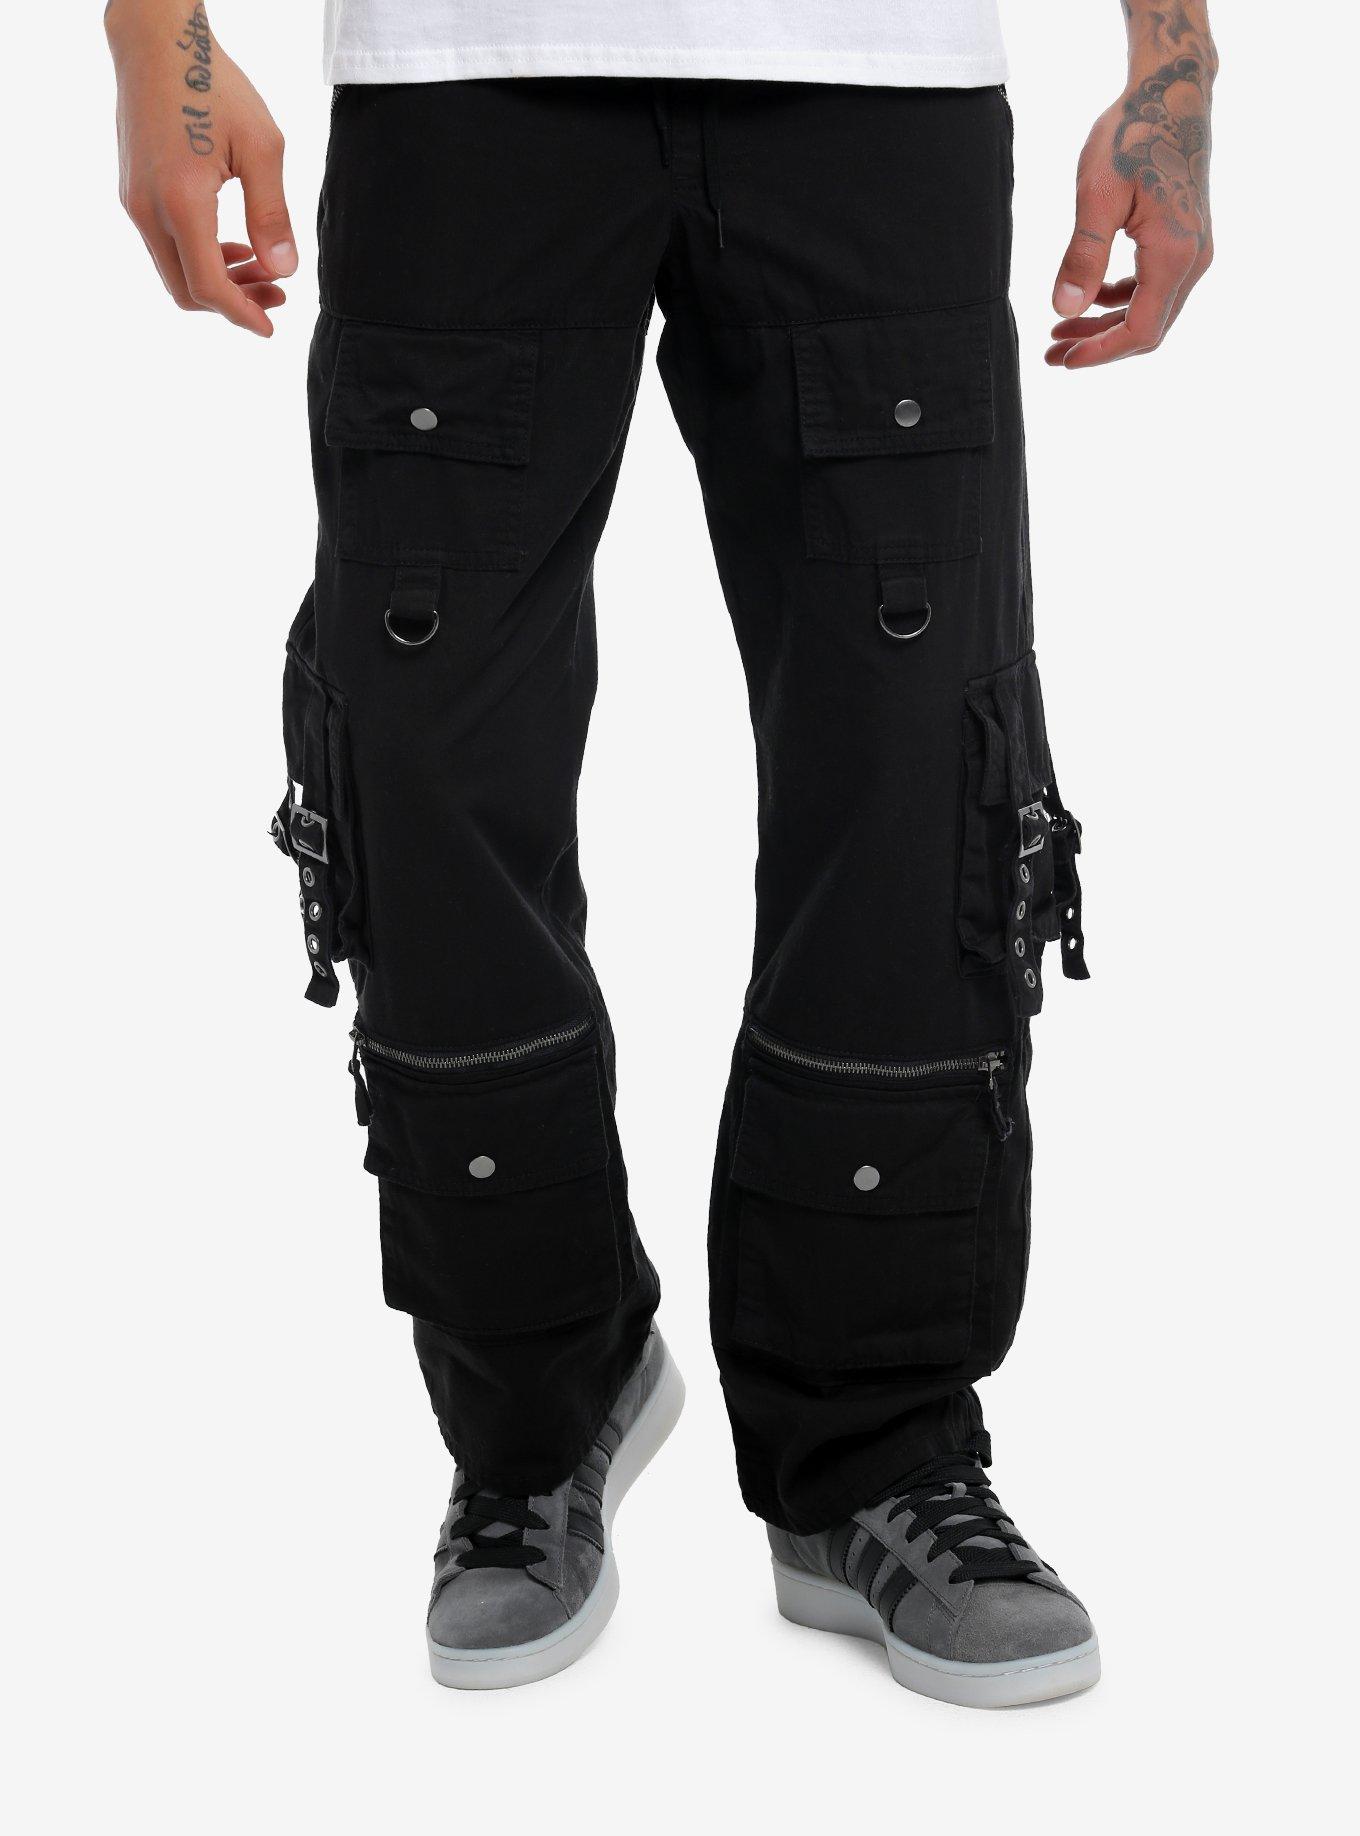 Black Zipper Cargo Strappy Pants | Hot Topic